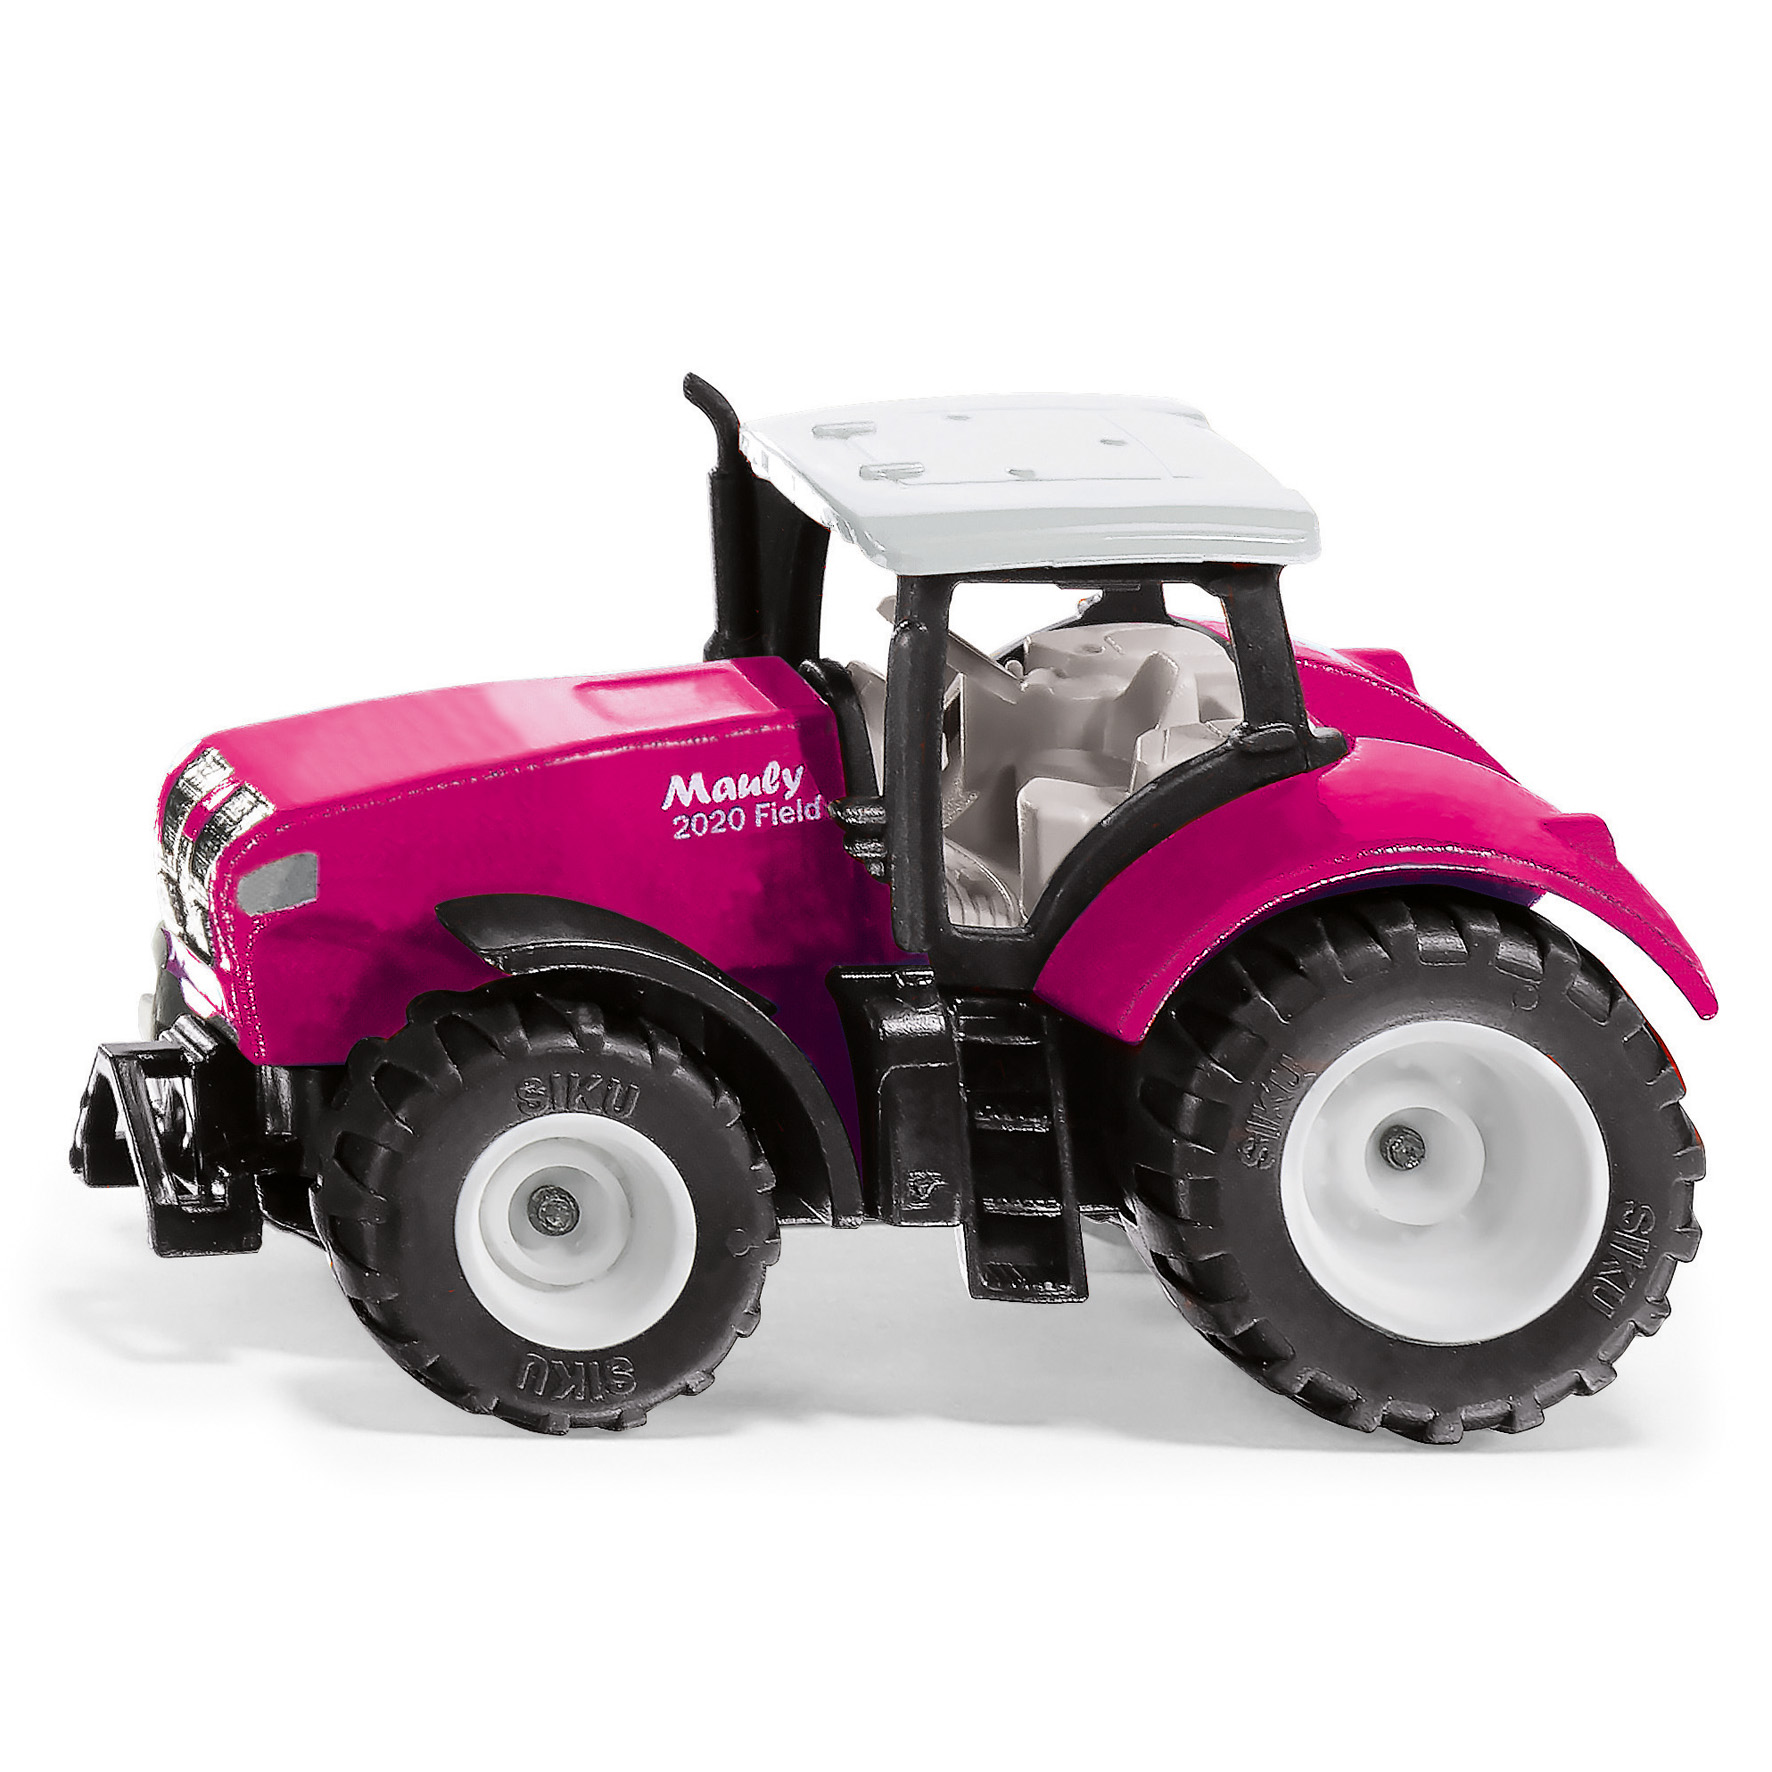 Traktorer & Lantbruksfordon mauly x540 tractor rosa